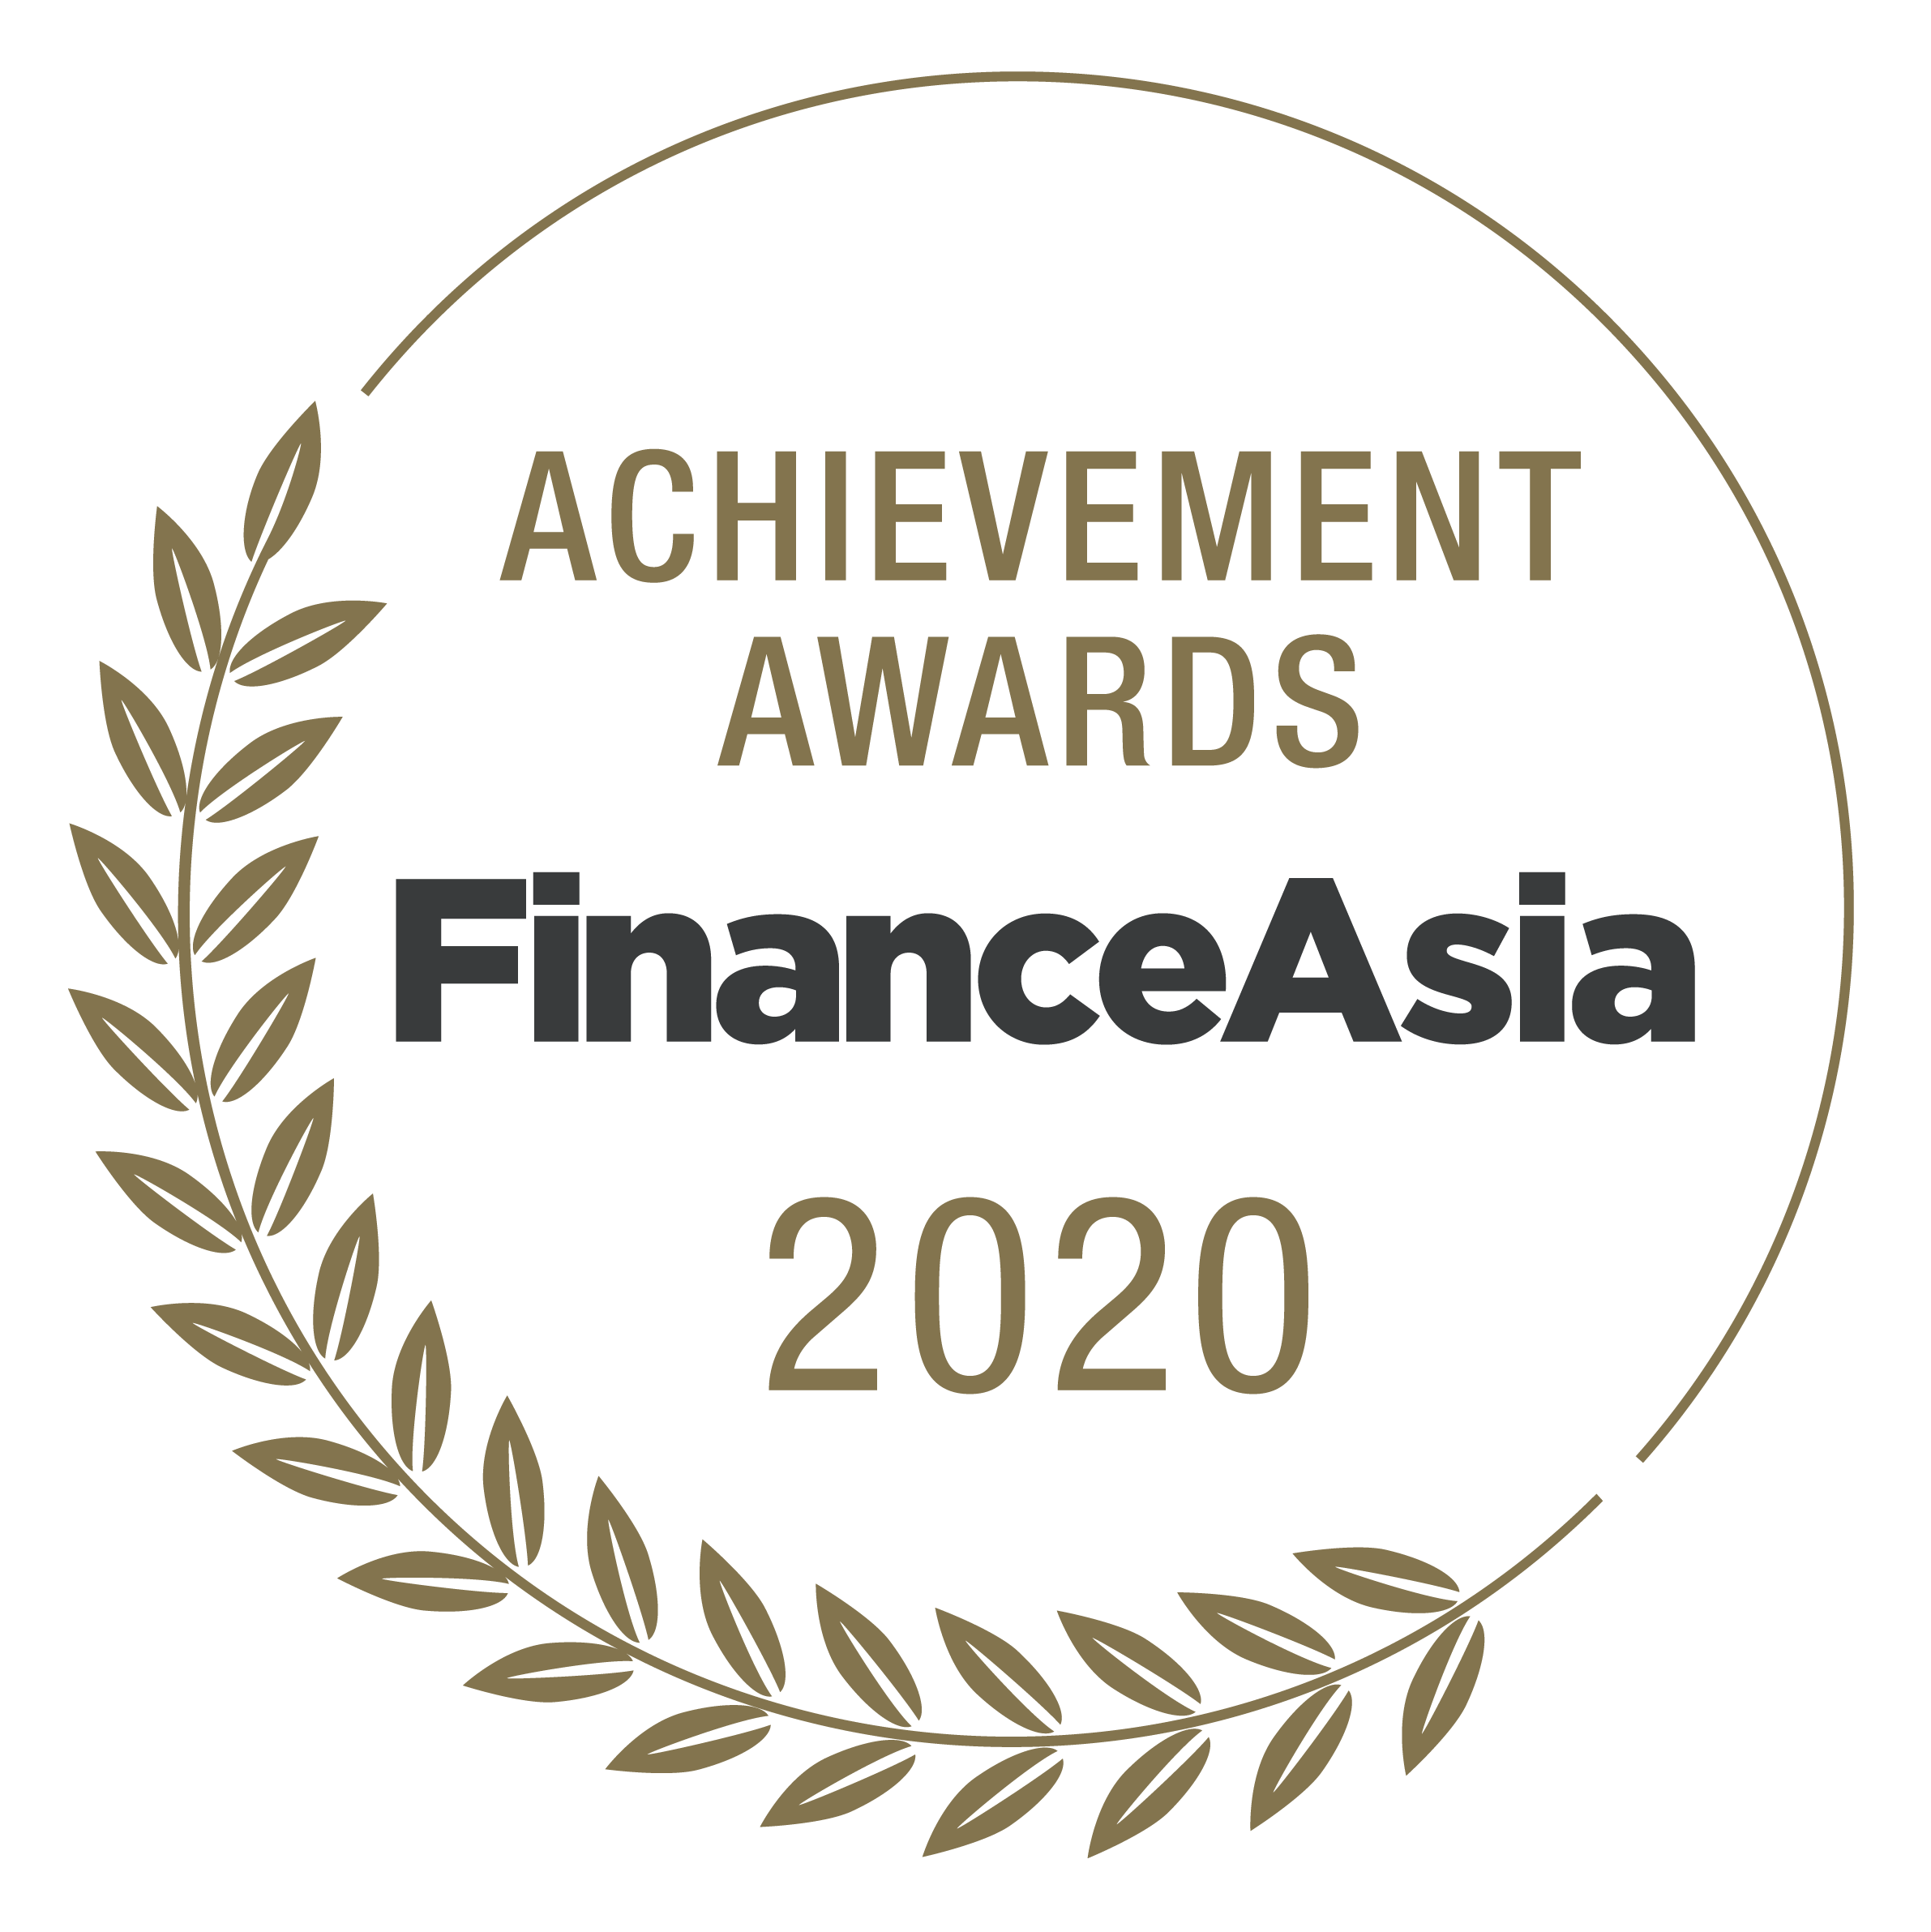 finance asia achievement awards 2020 logo